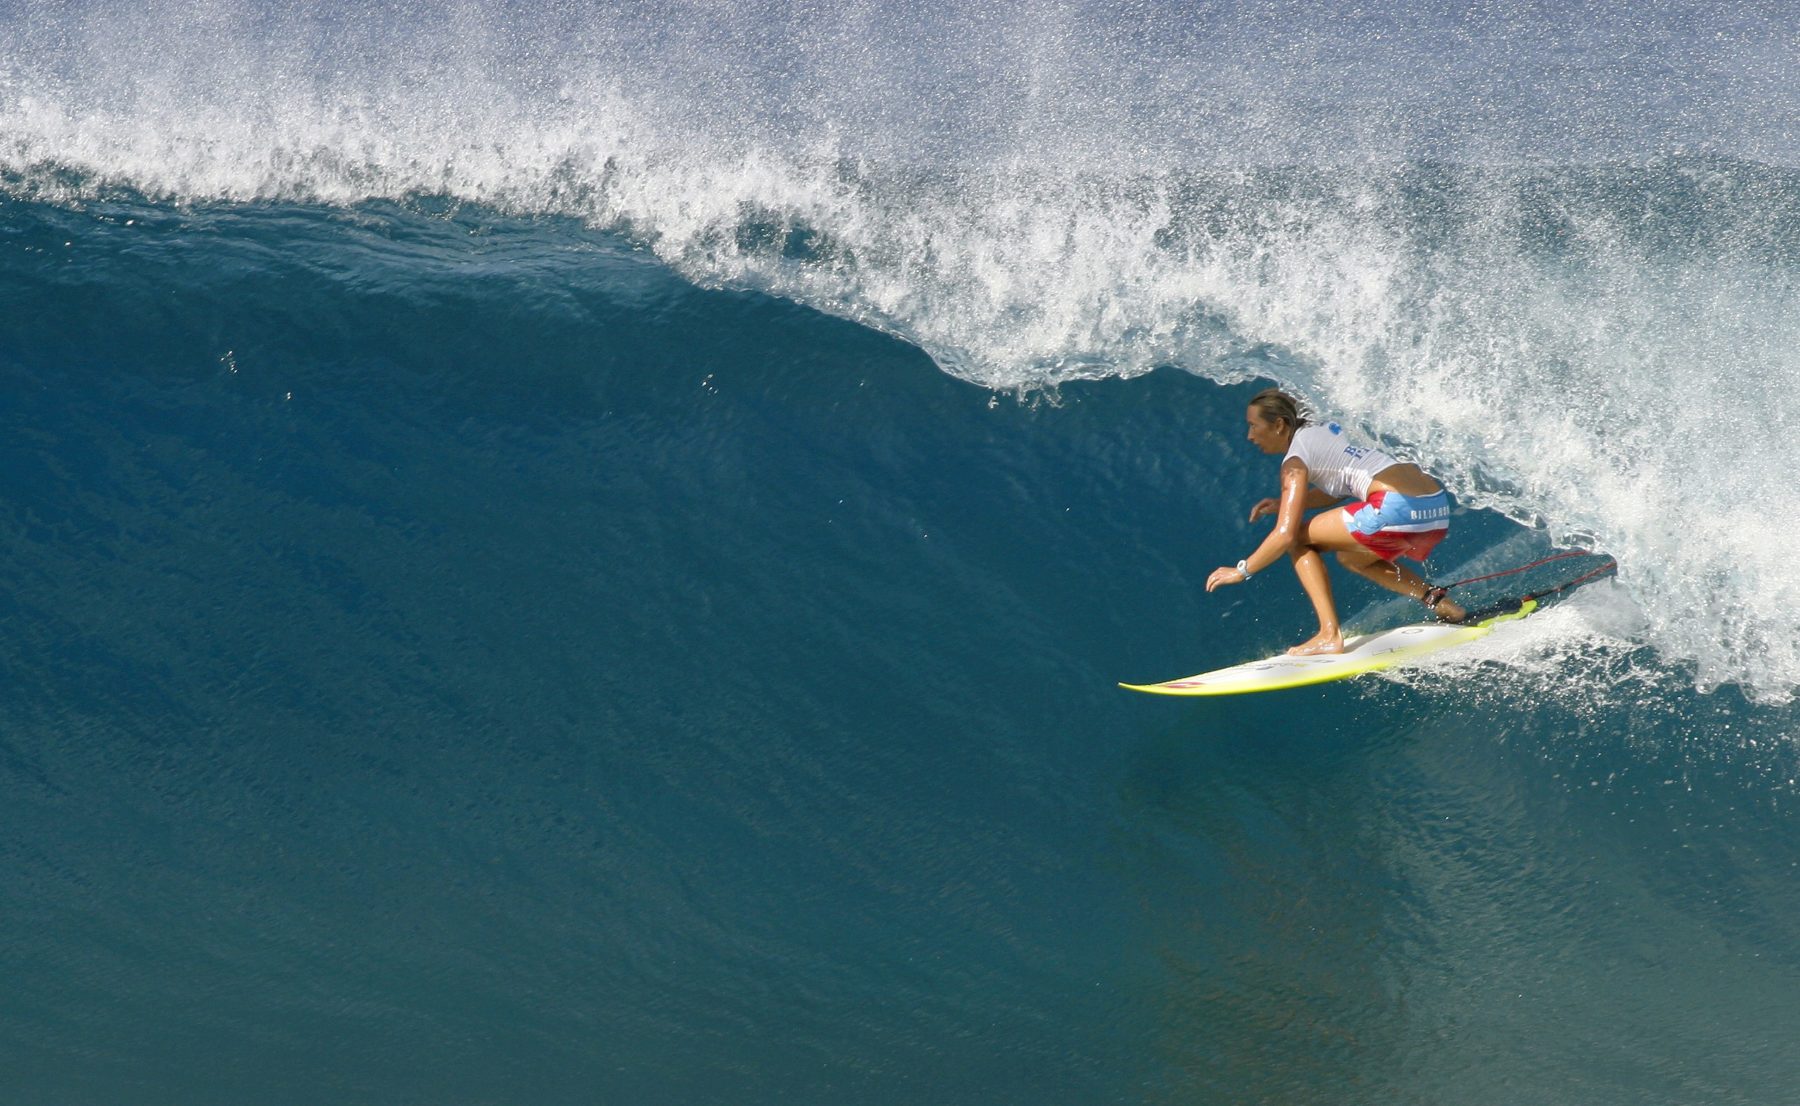 layne-beachley-surfer-champion